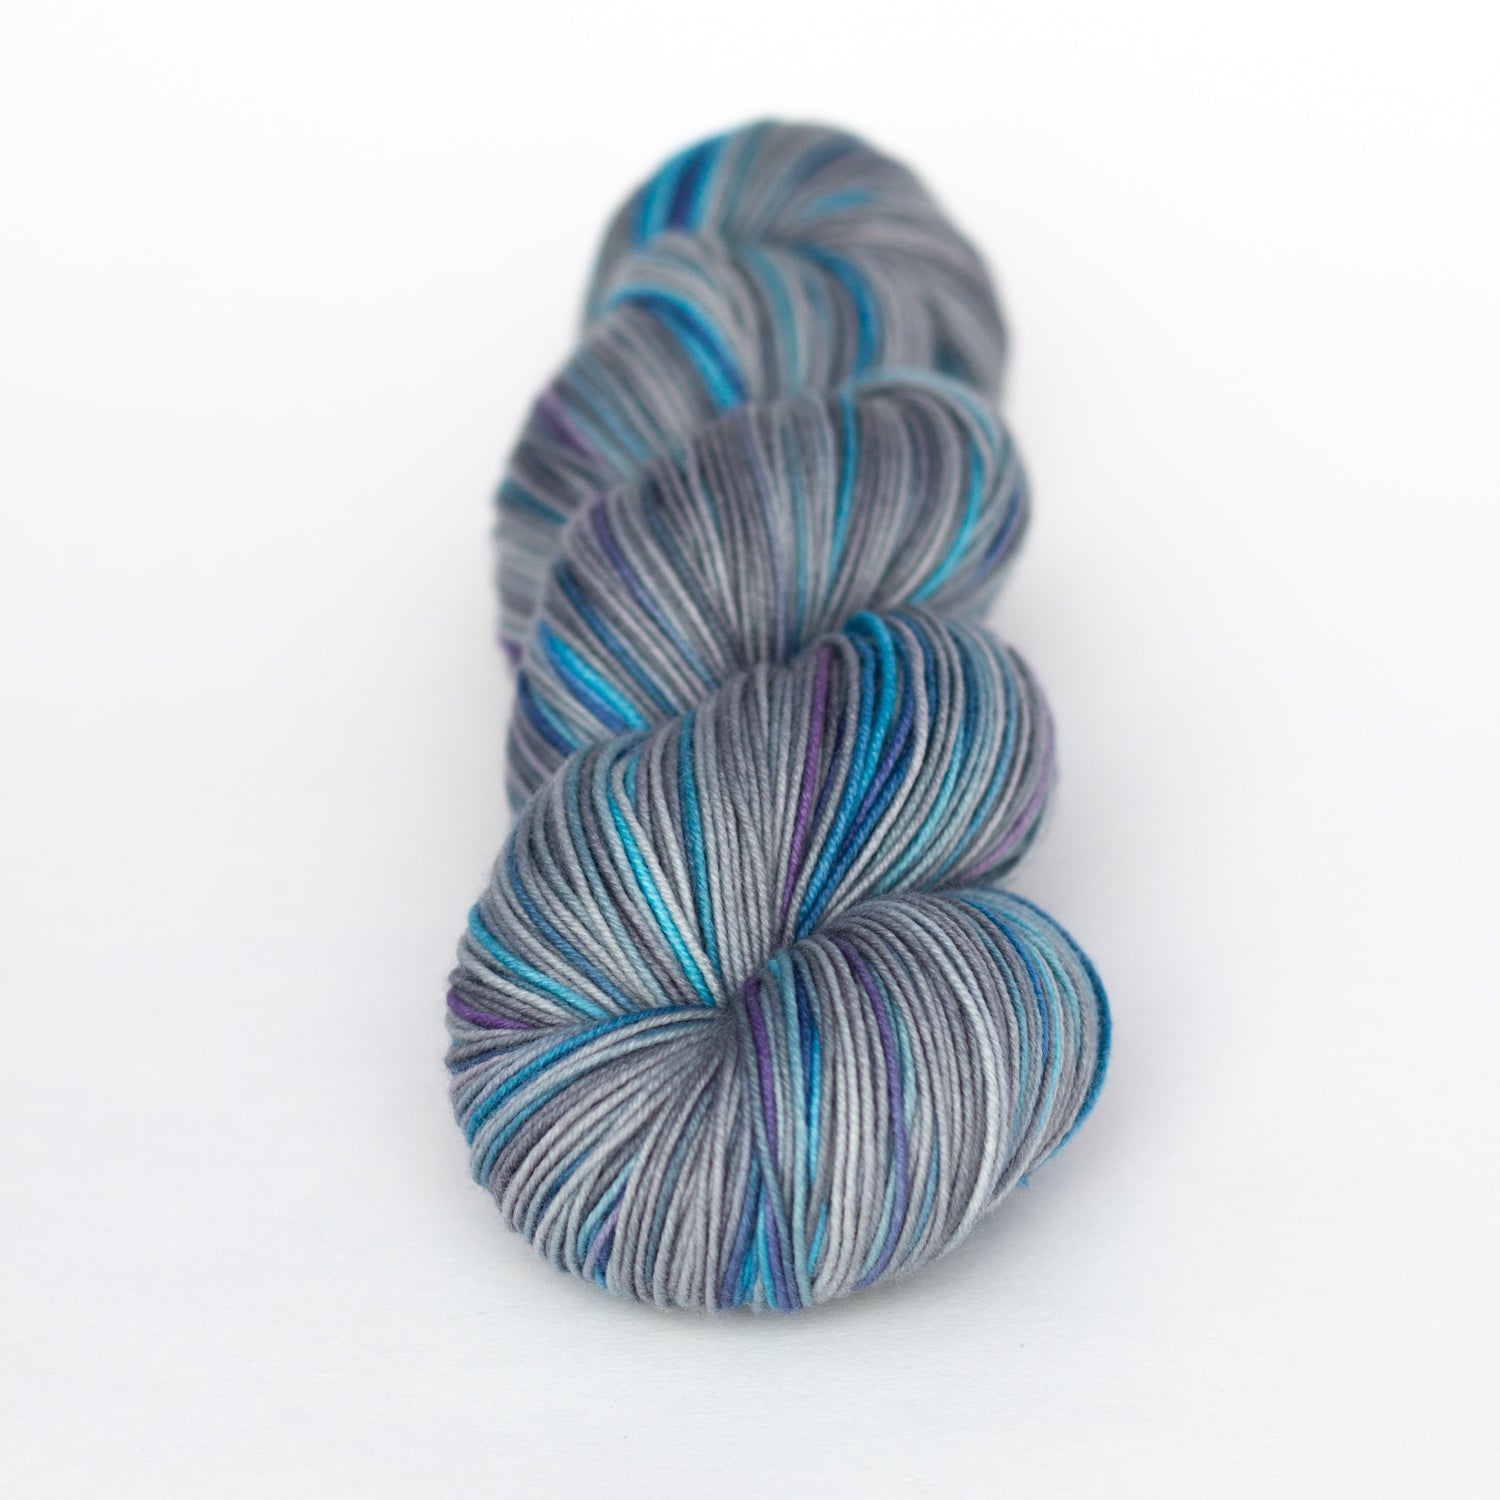 Storm Cloud self striping patterning yarn sock knitting gauge dye works